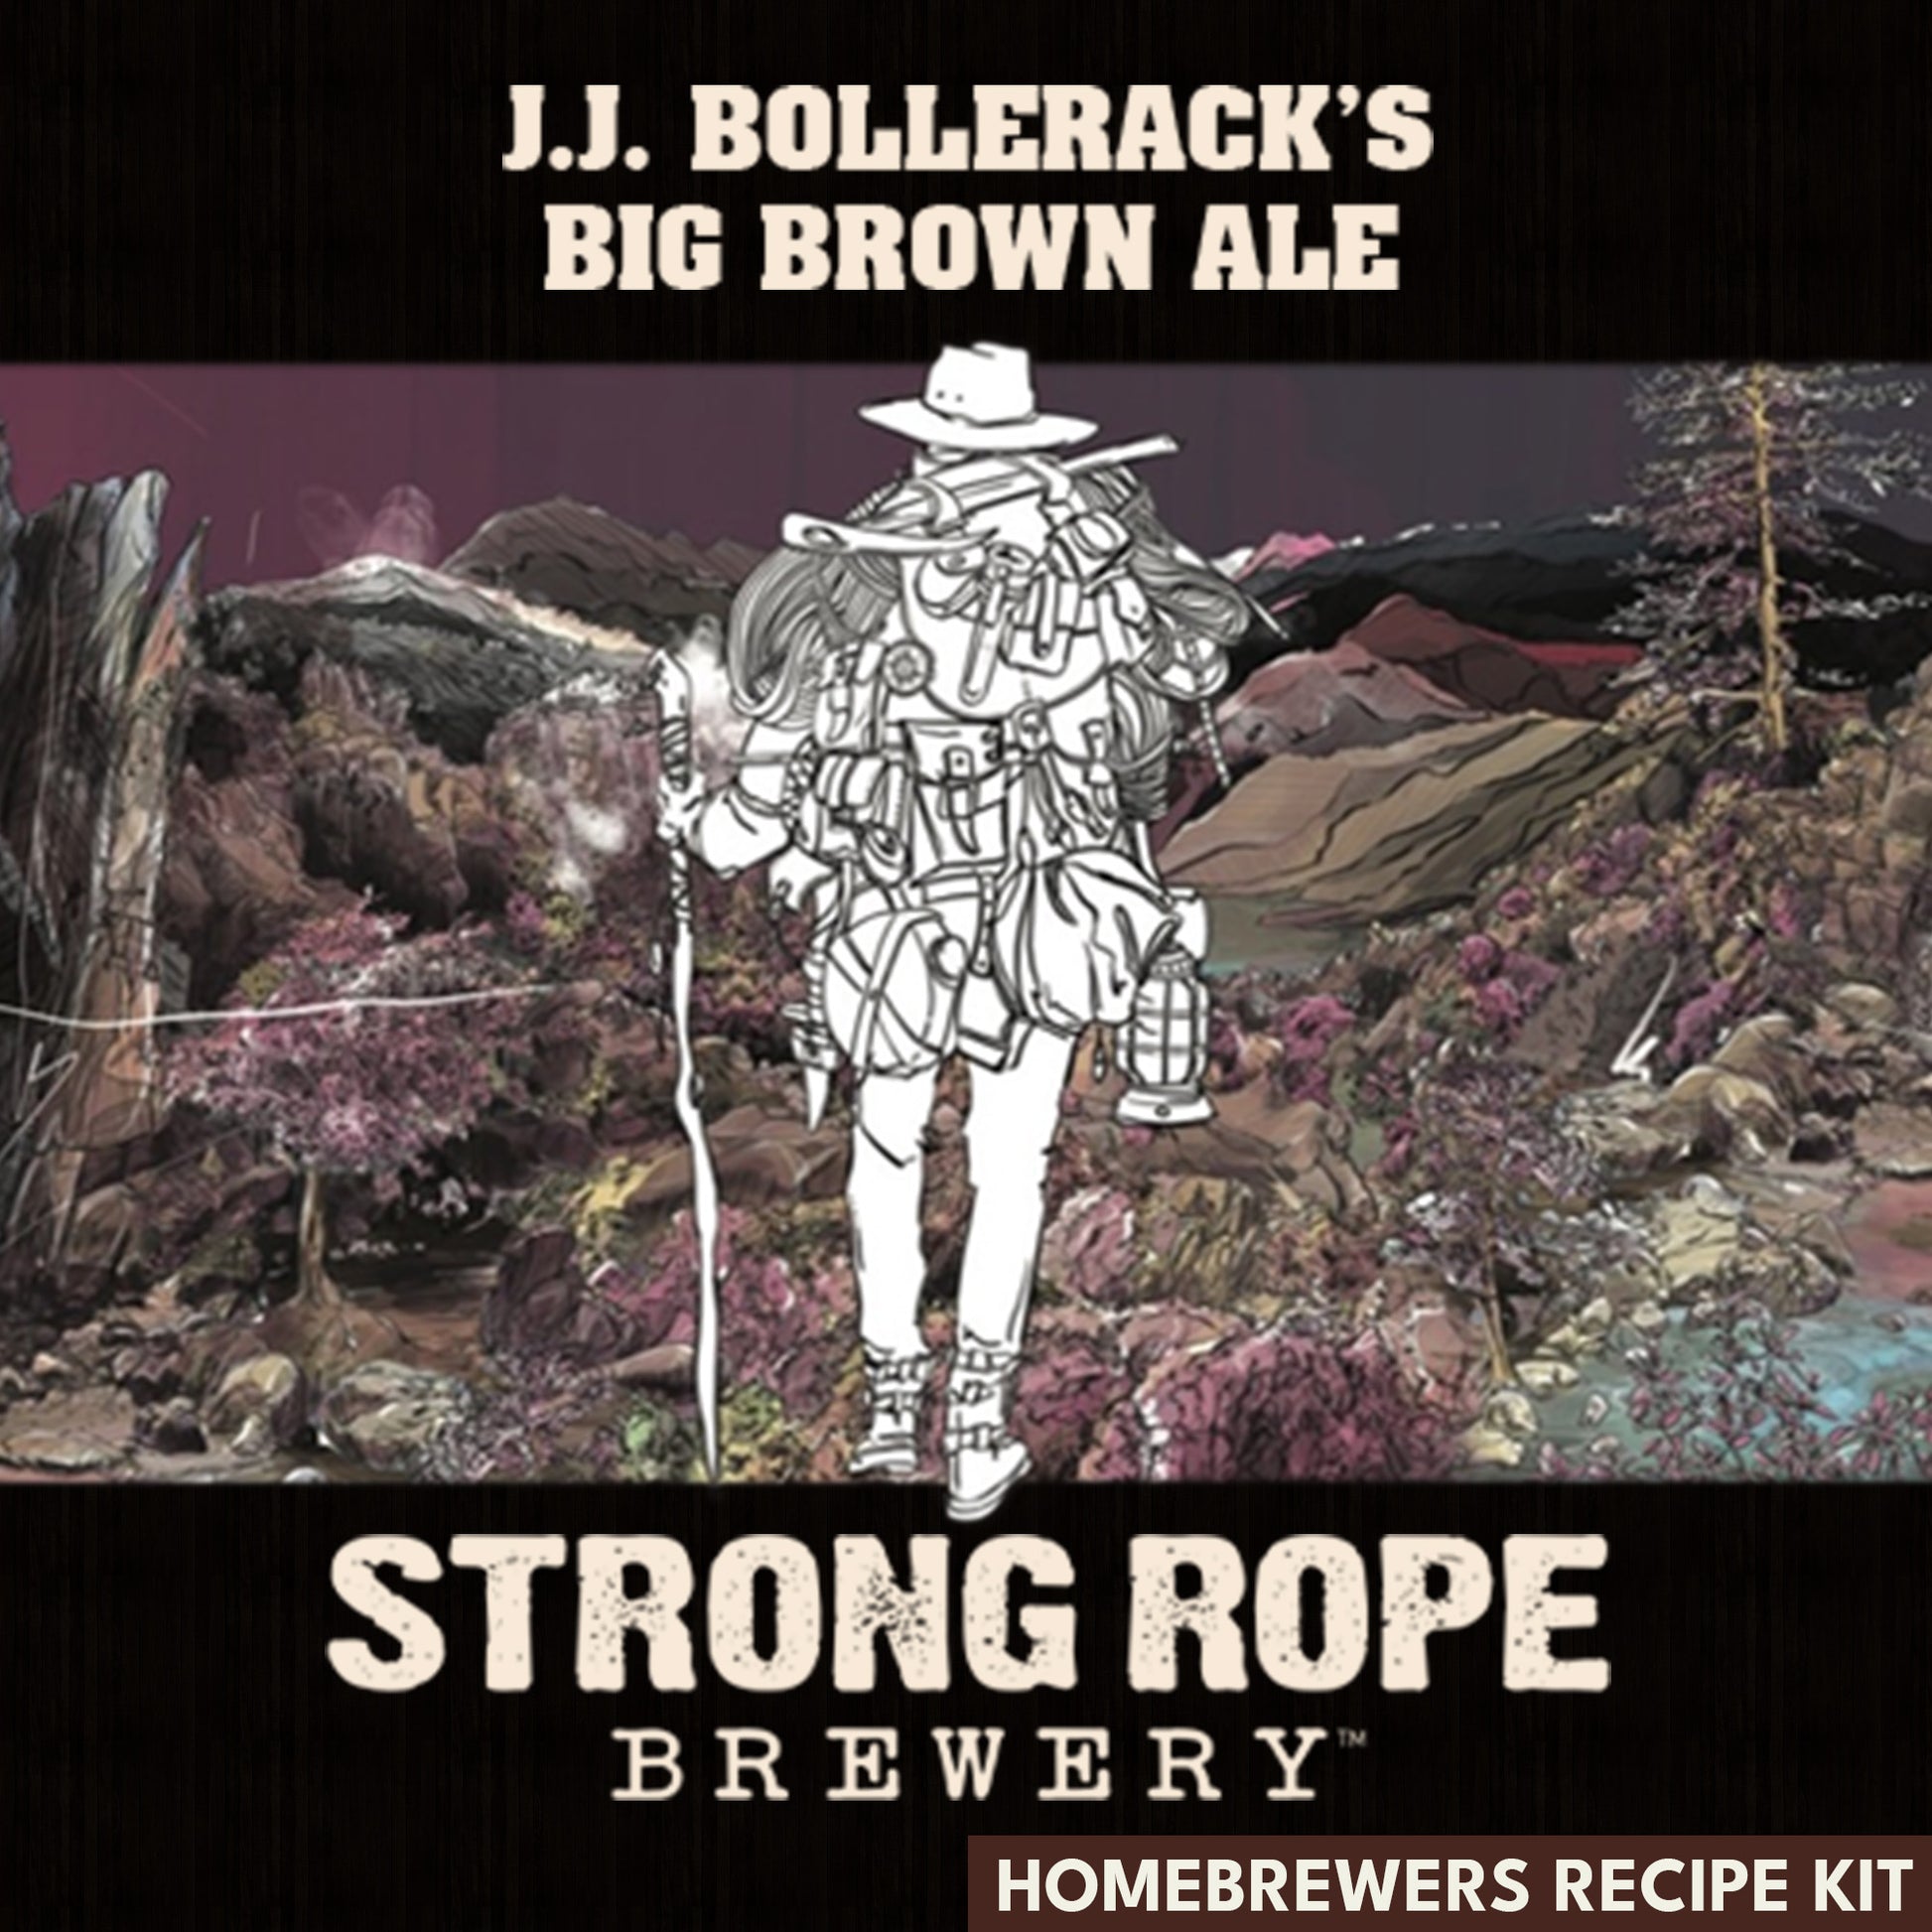 J.J. Bolleracks Big Brown Ale - Strong Rope Brewery - NYC Brewery Series - Homebrewers Recipe Kit